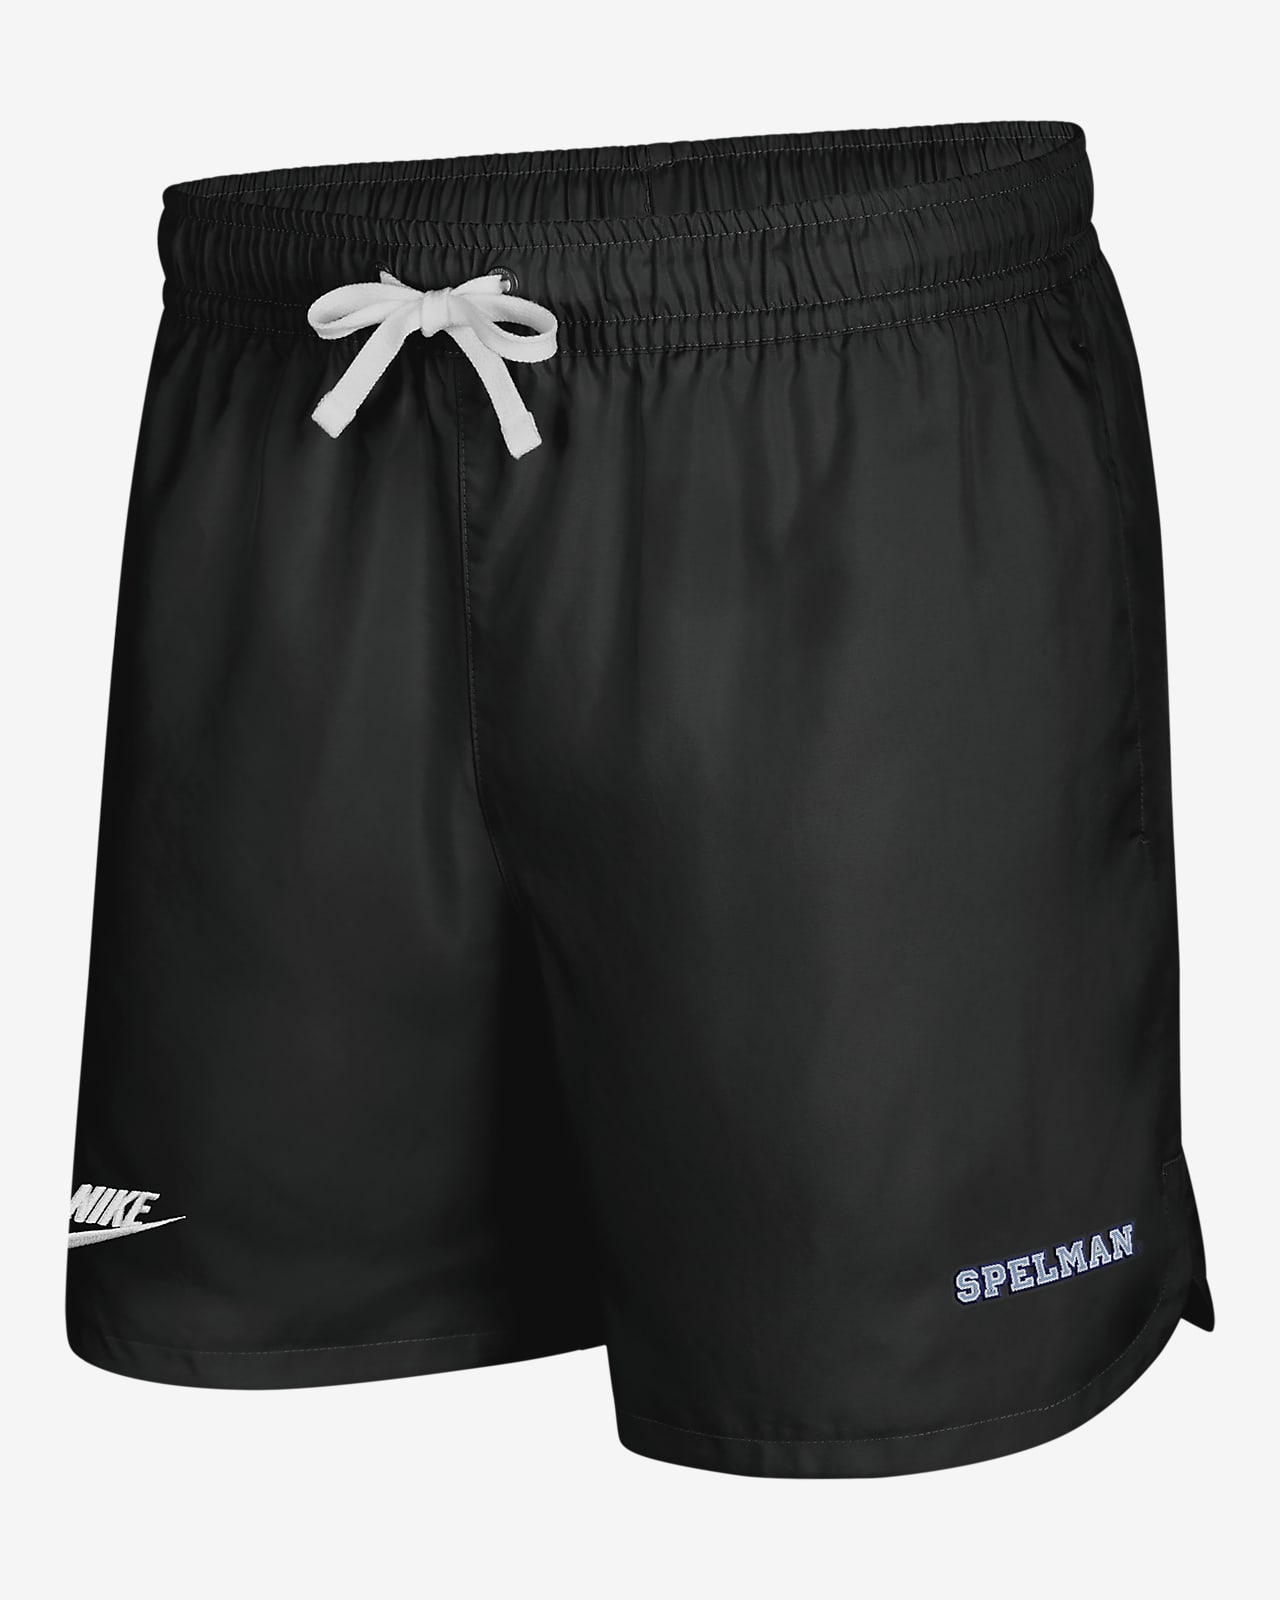 Spelman Men's Nike College Flow Shorts